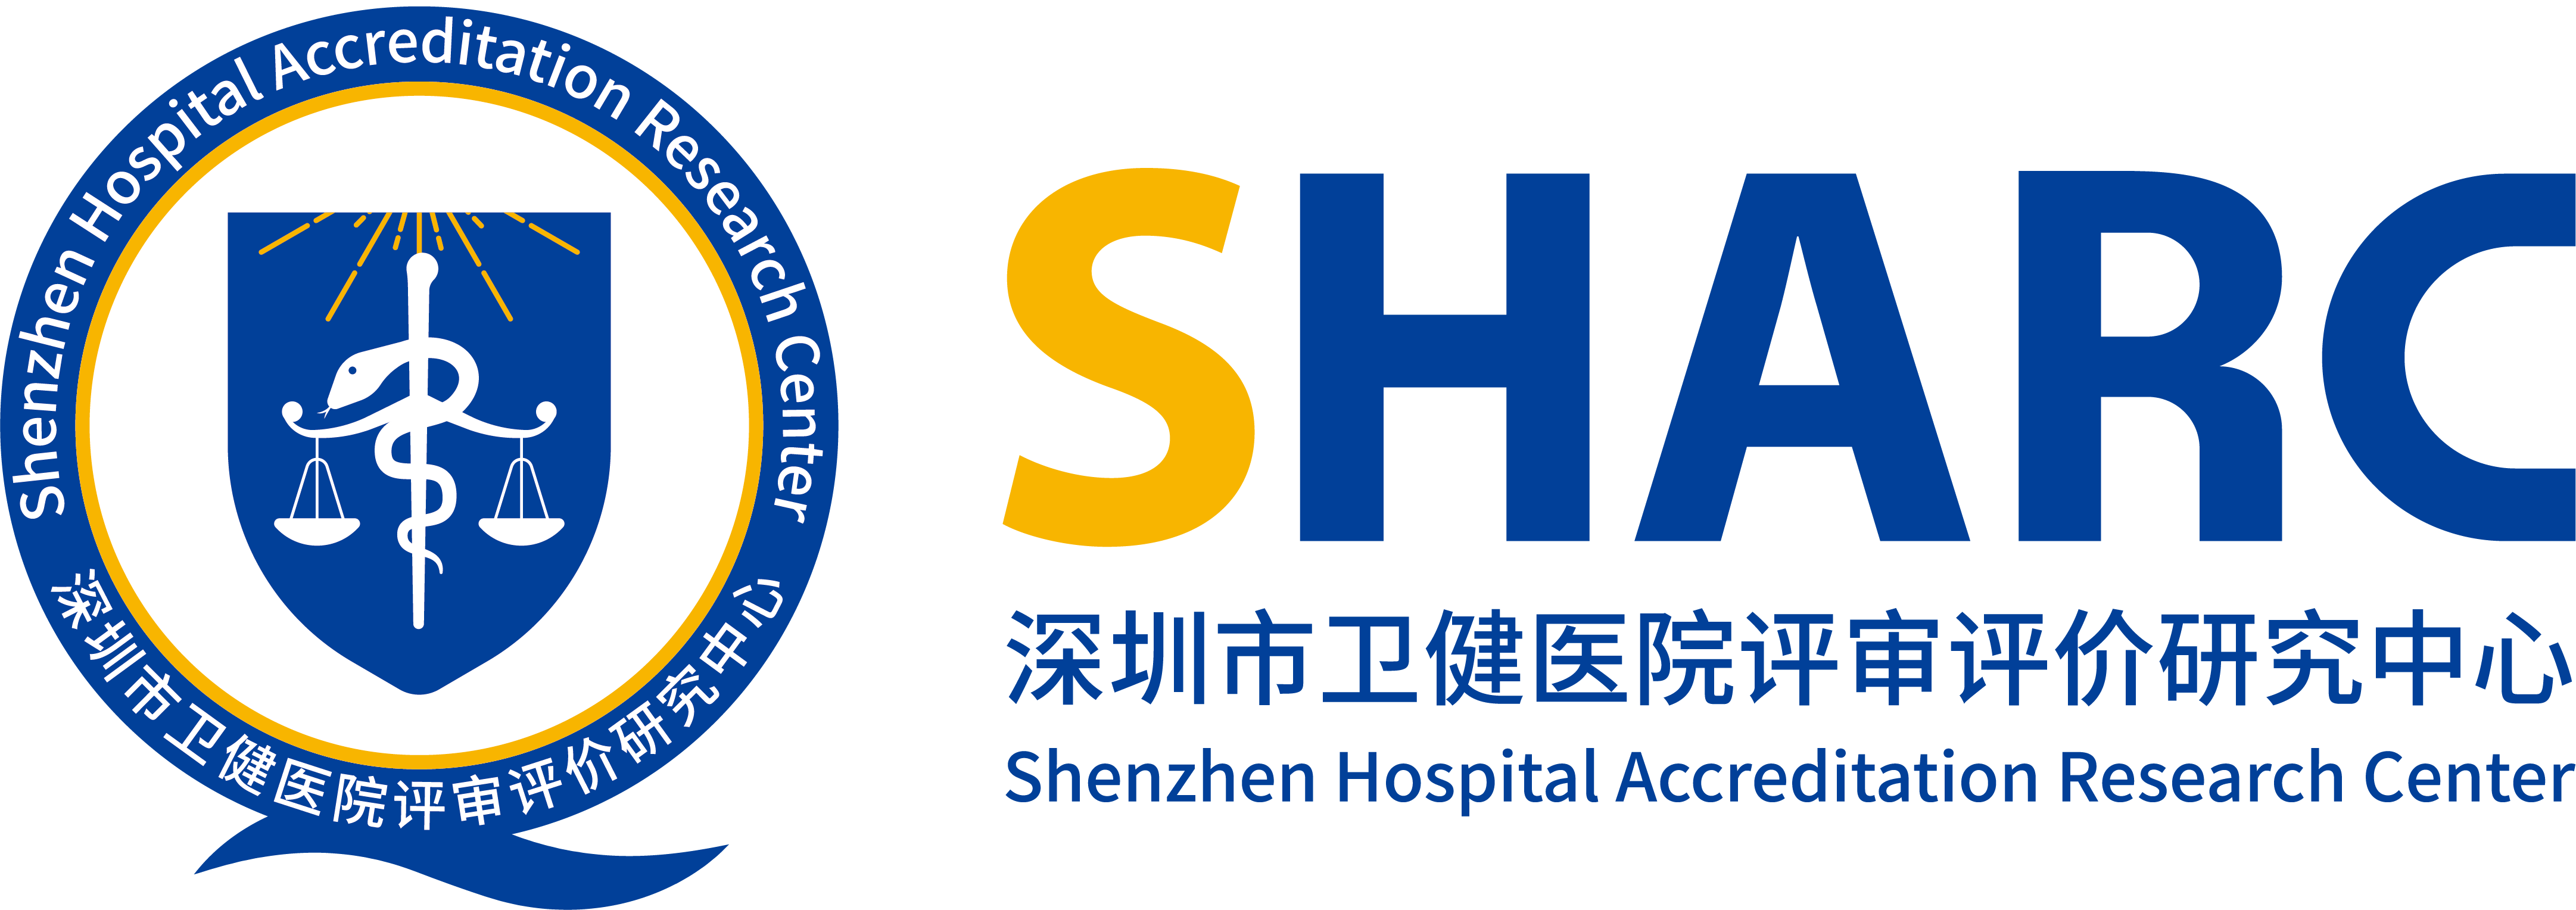 Shenzhen Hospital Accreditation Research Center